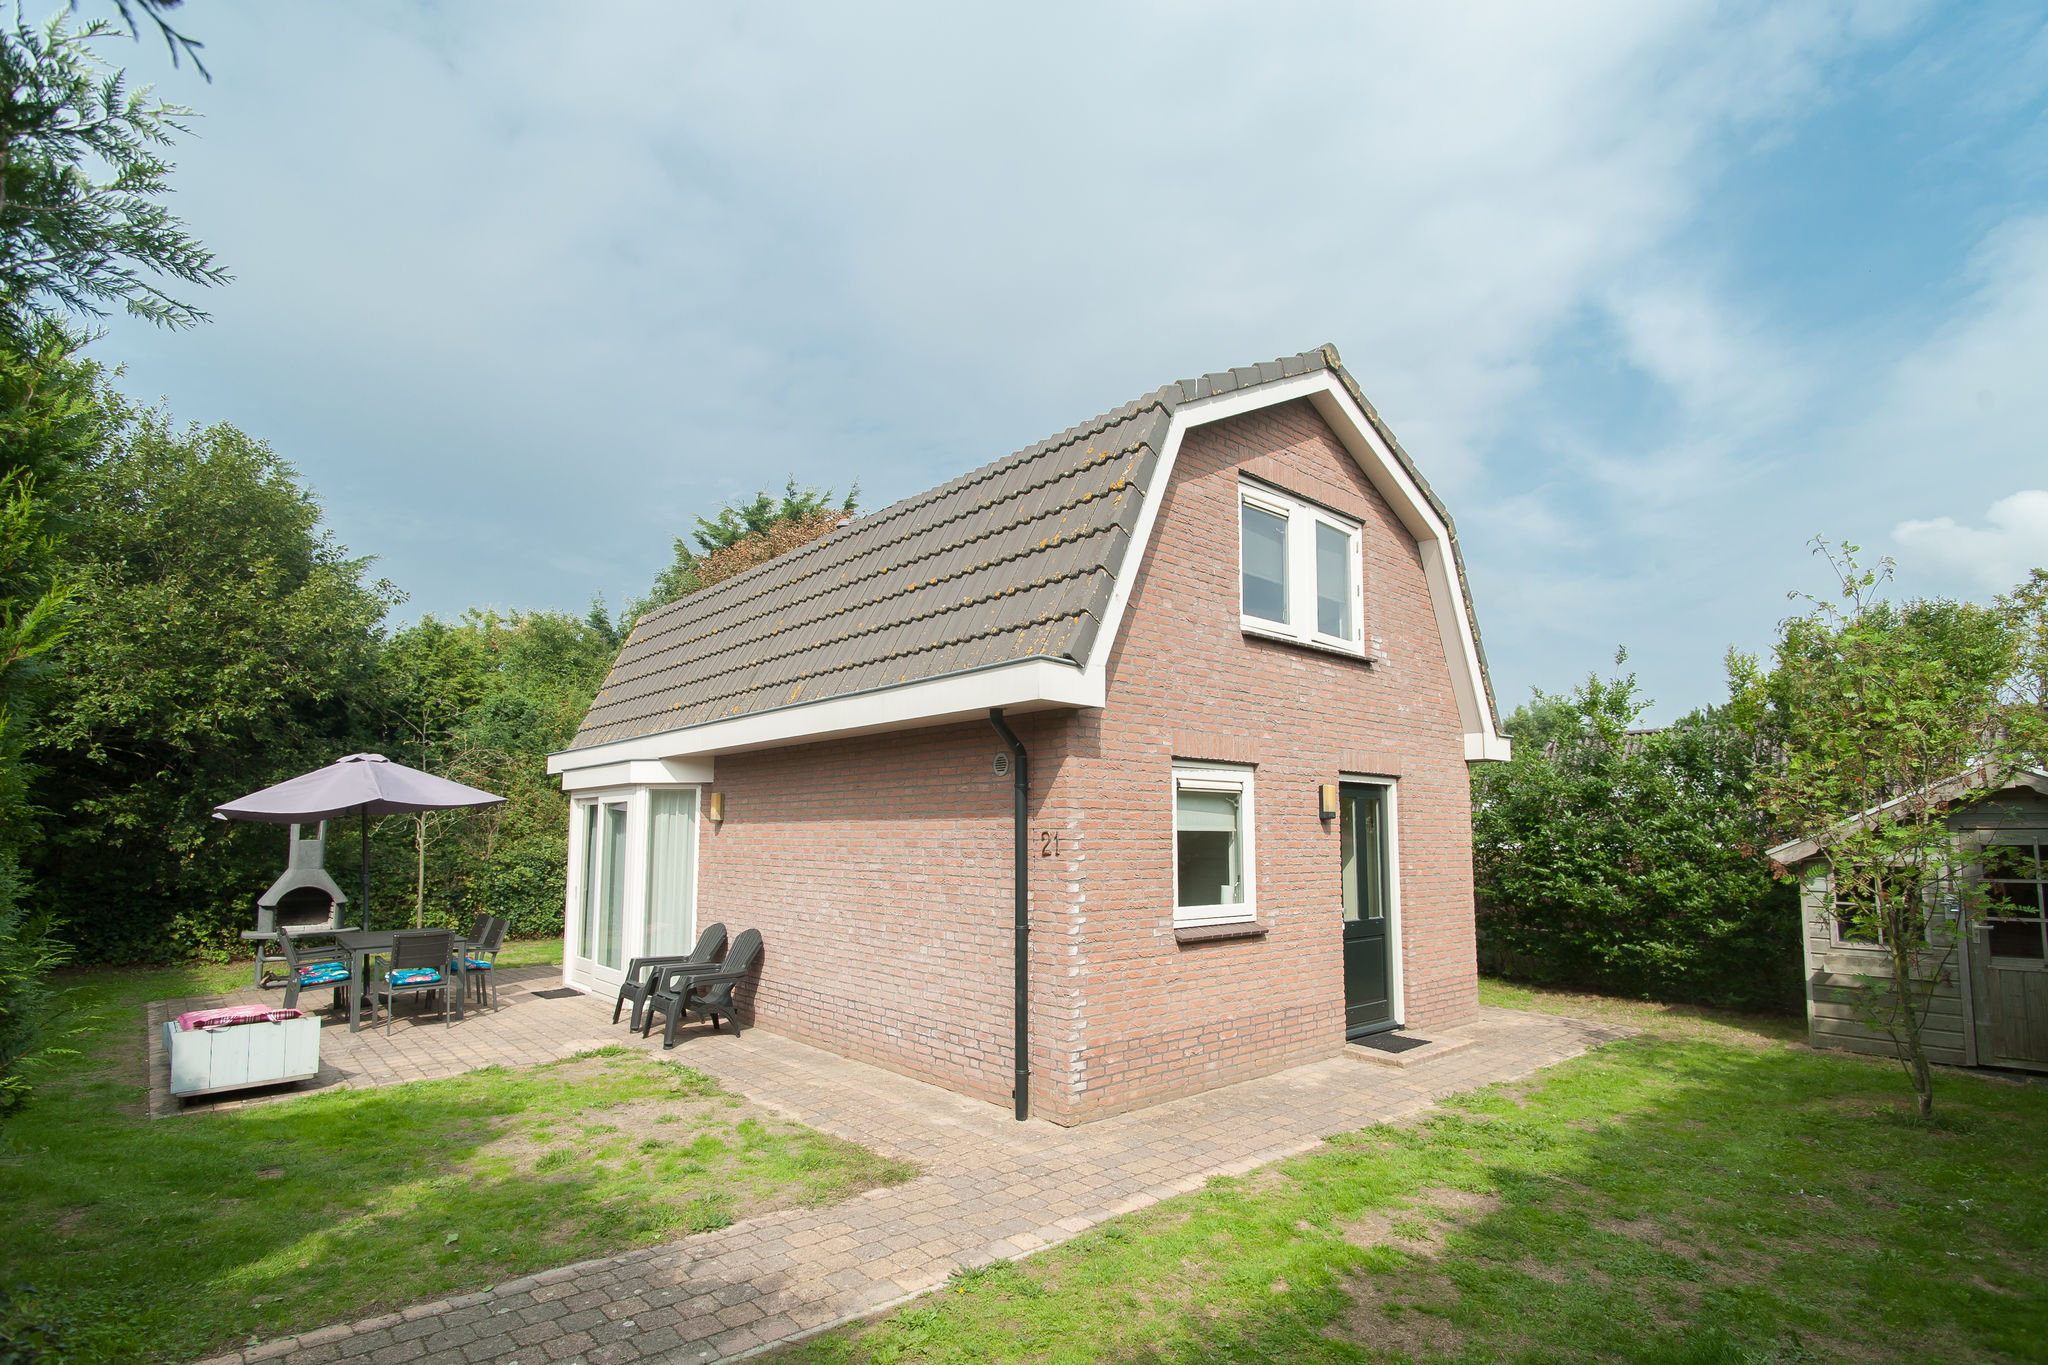 Nice holiday home in Noordwijk near the sea